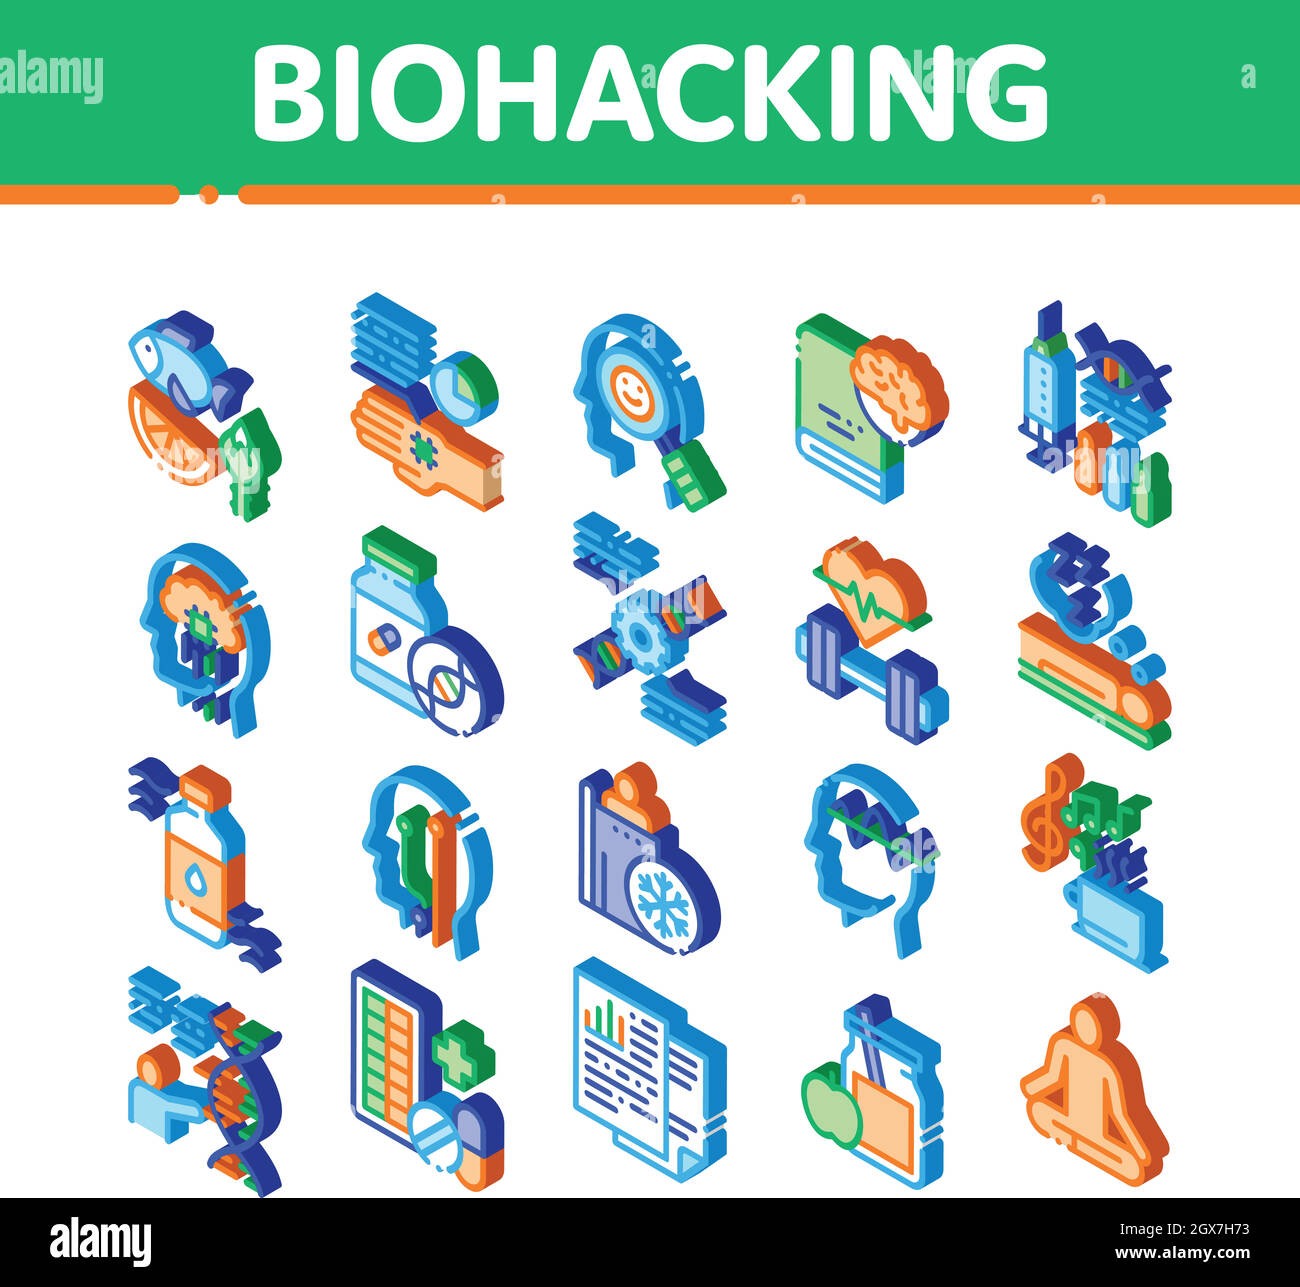 Biohacking Isometric Elements Icons Set Vector Stock Vector